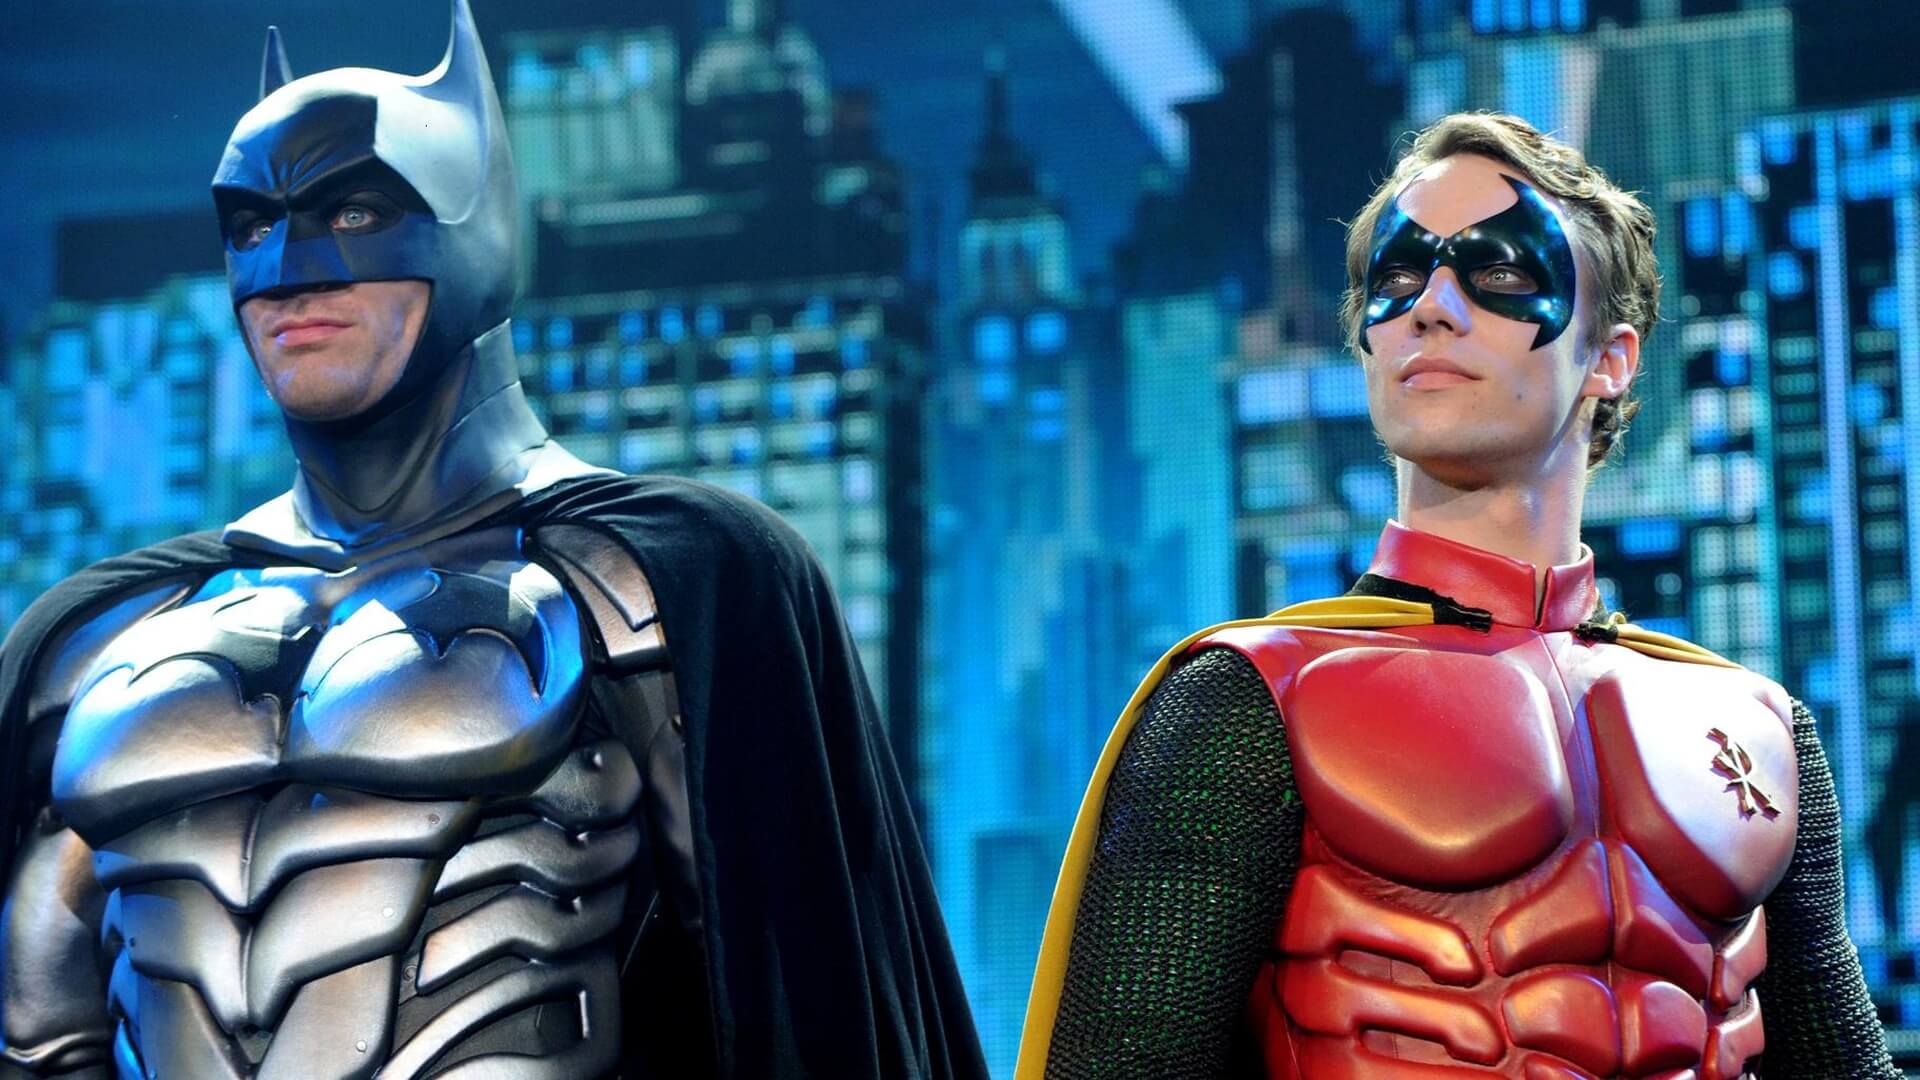 Dynamic Duo: Batman and Robin